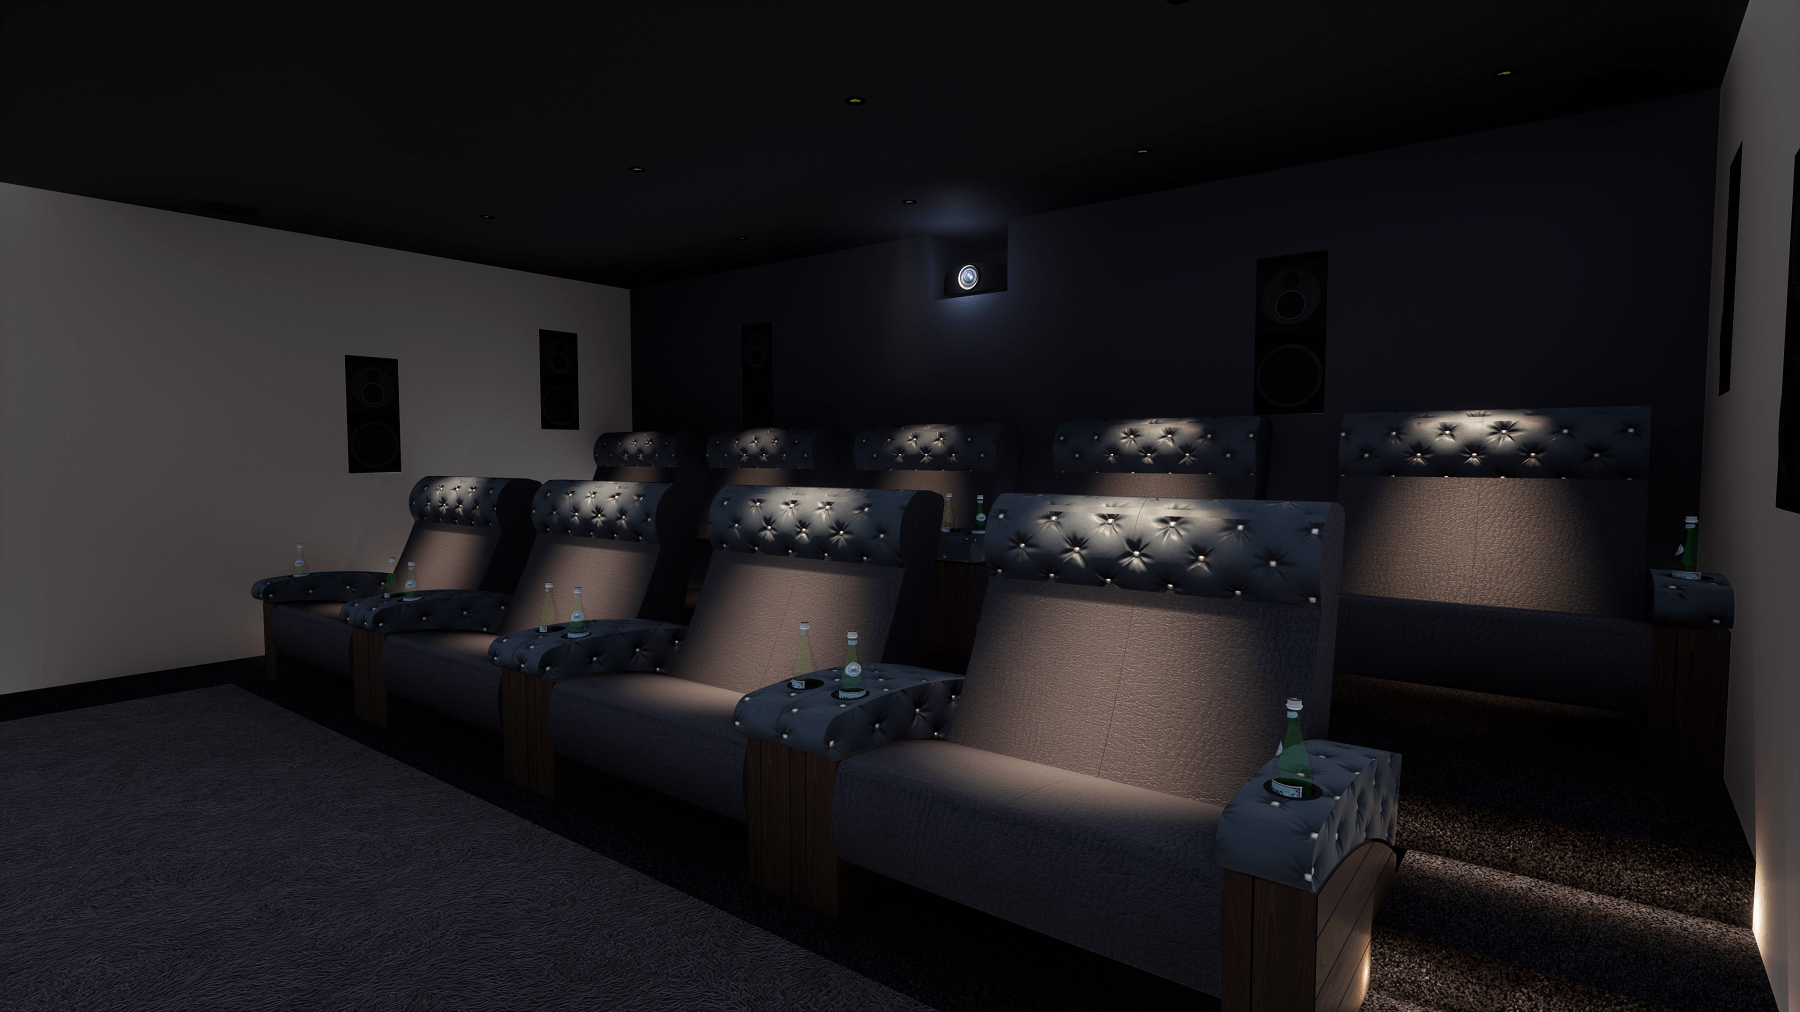 B&W Custom Theater 800 Home Cinema Room